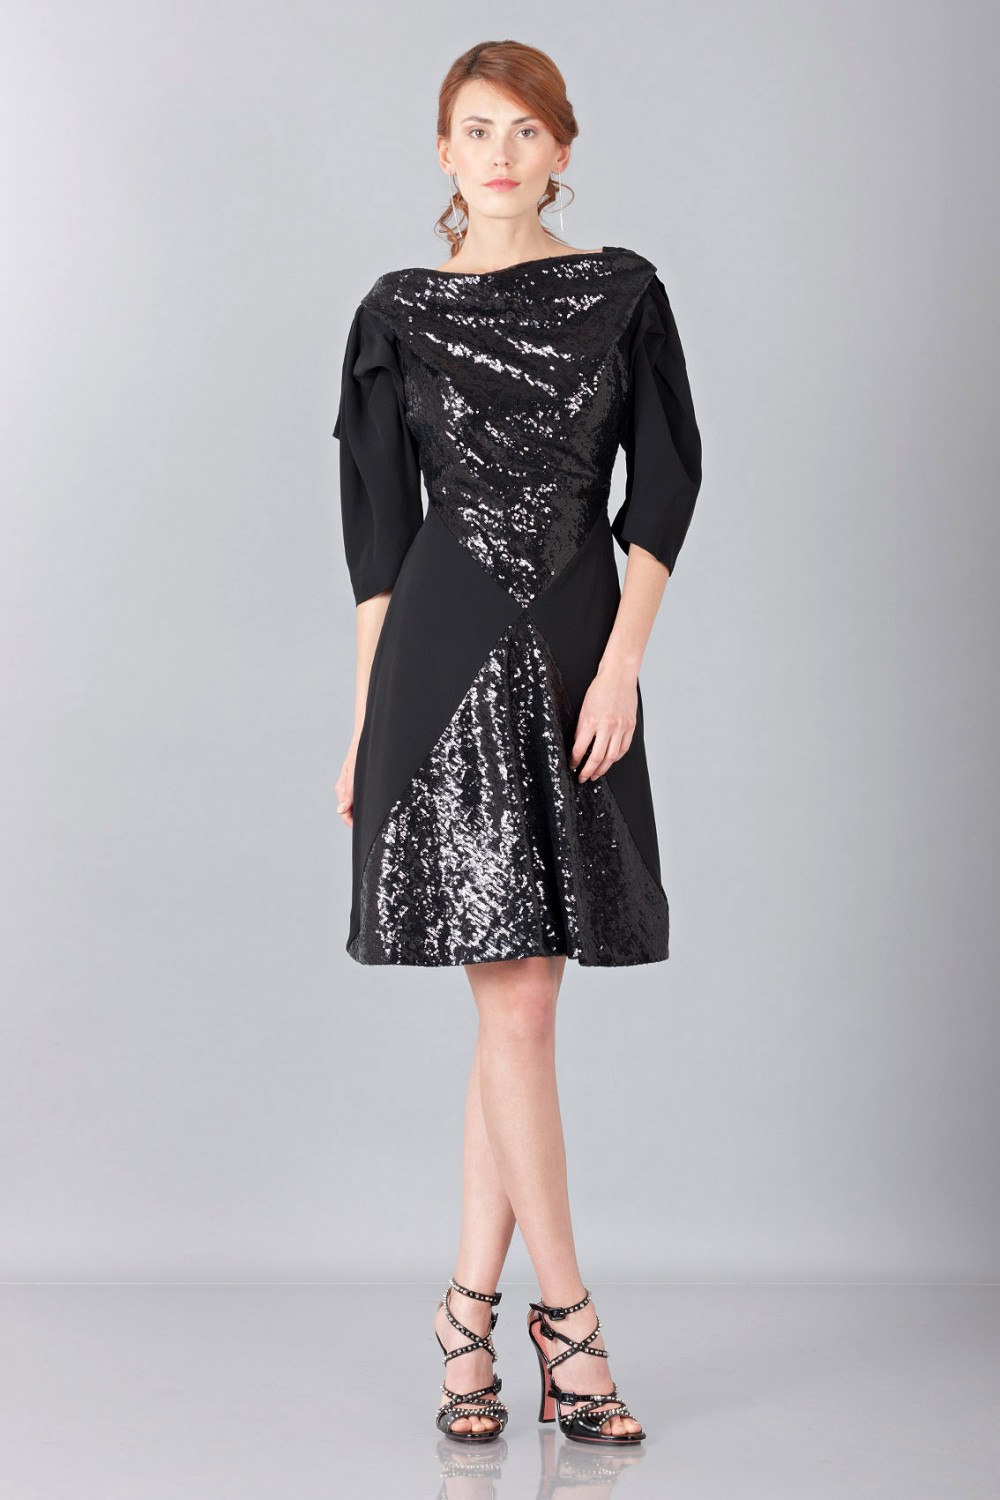 Noleggio Abbigliamento Firmato - Paillettes dress - Vivienne Westwood - Drexcode -4